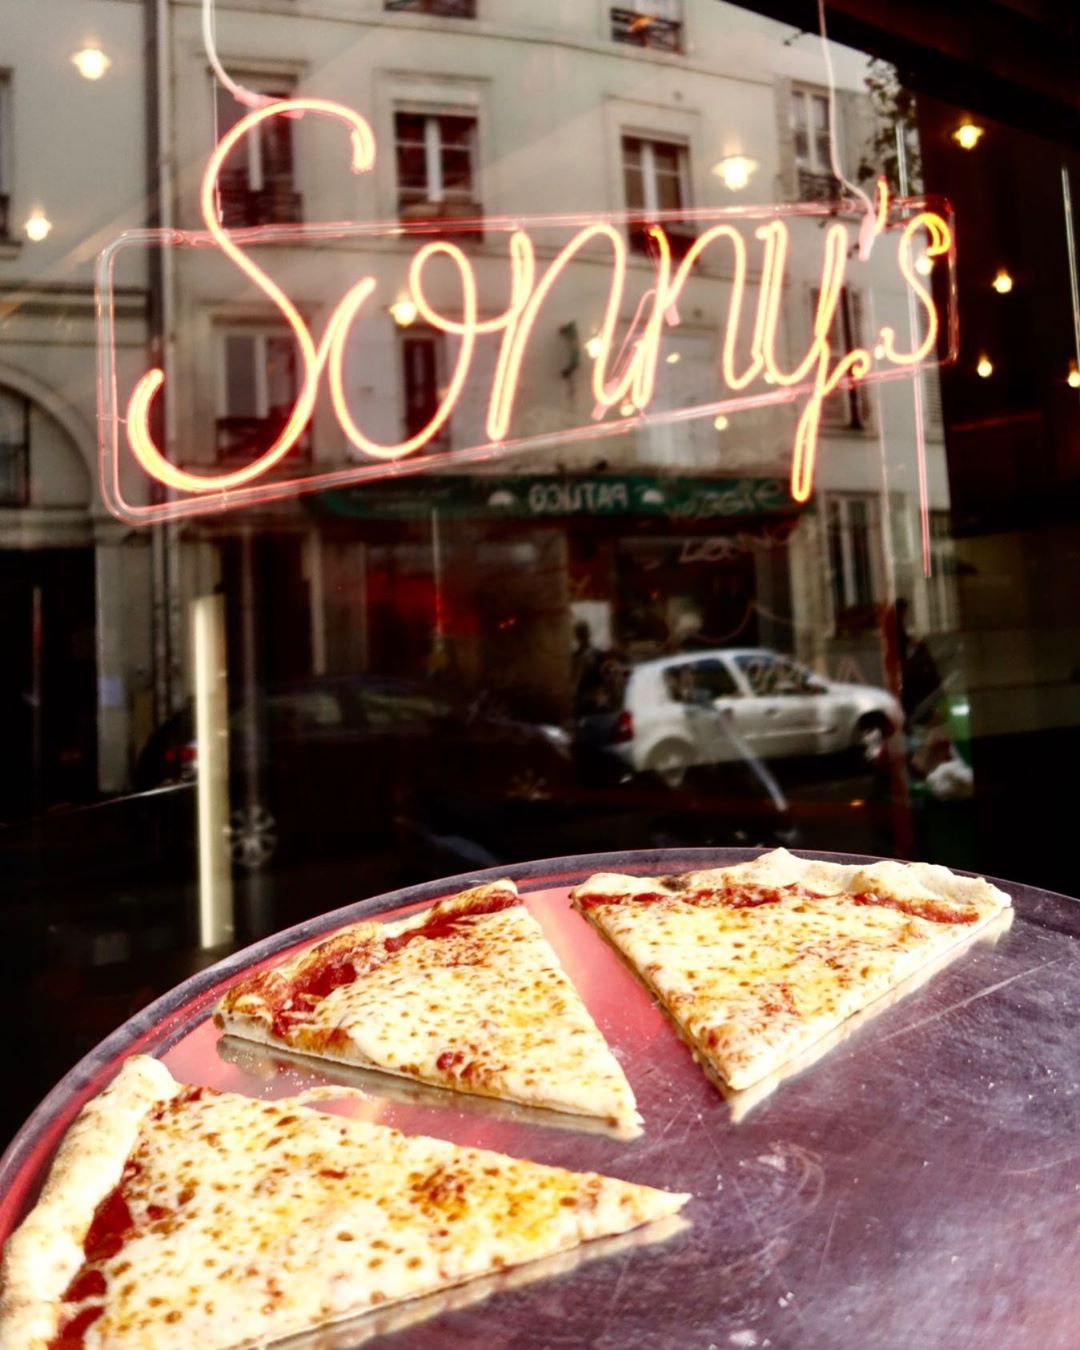 Sonny’s Pizza – La pizza version N.Y.C